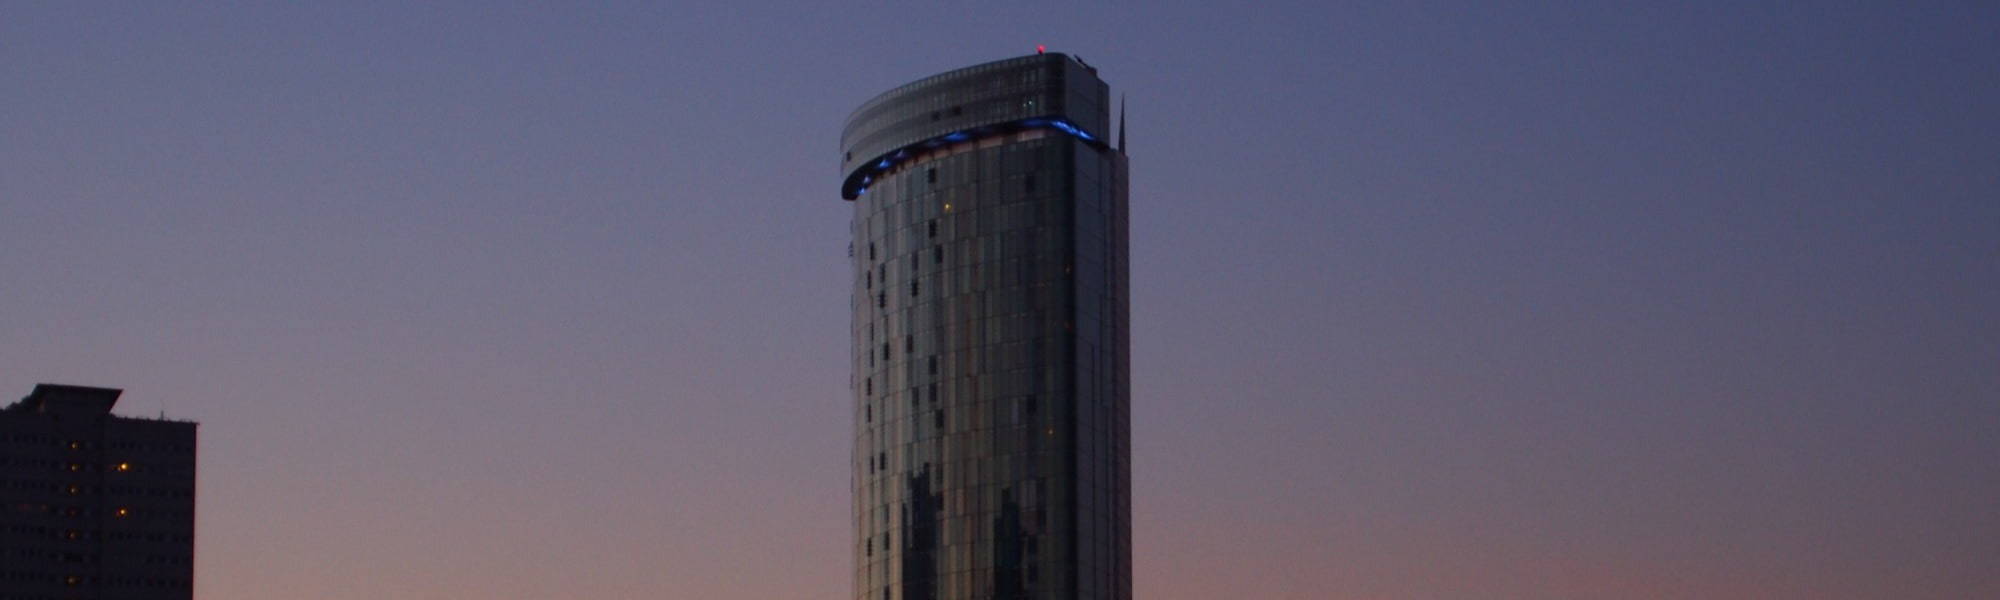 Sun set over Birmingham UK. Radisson Hotel. Commercial